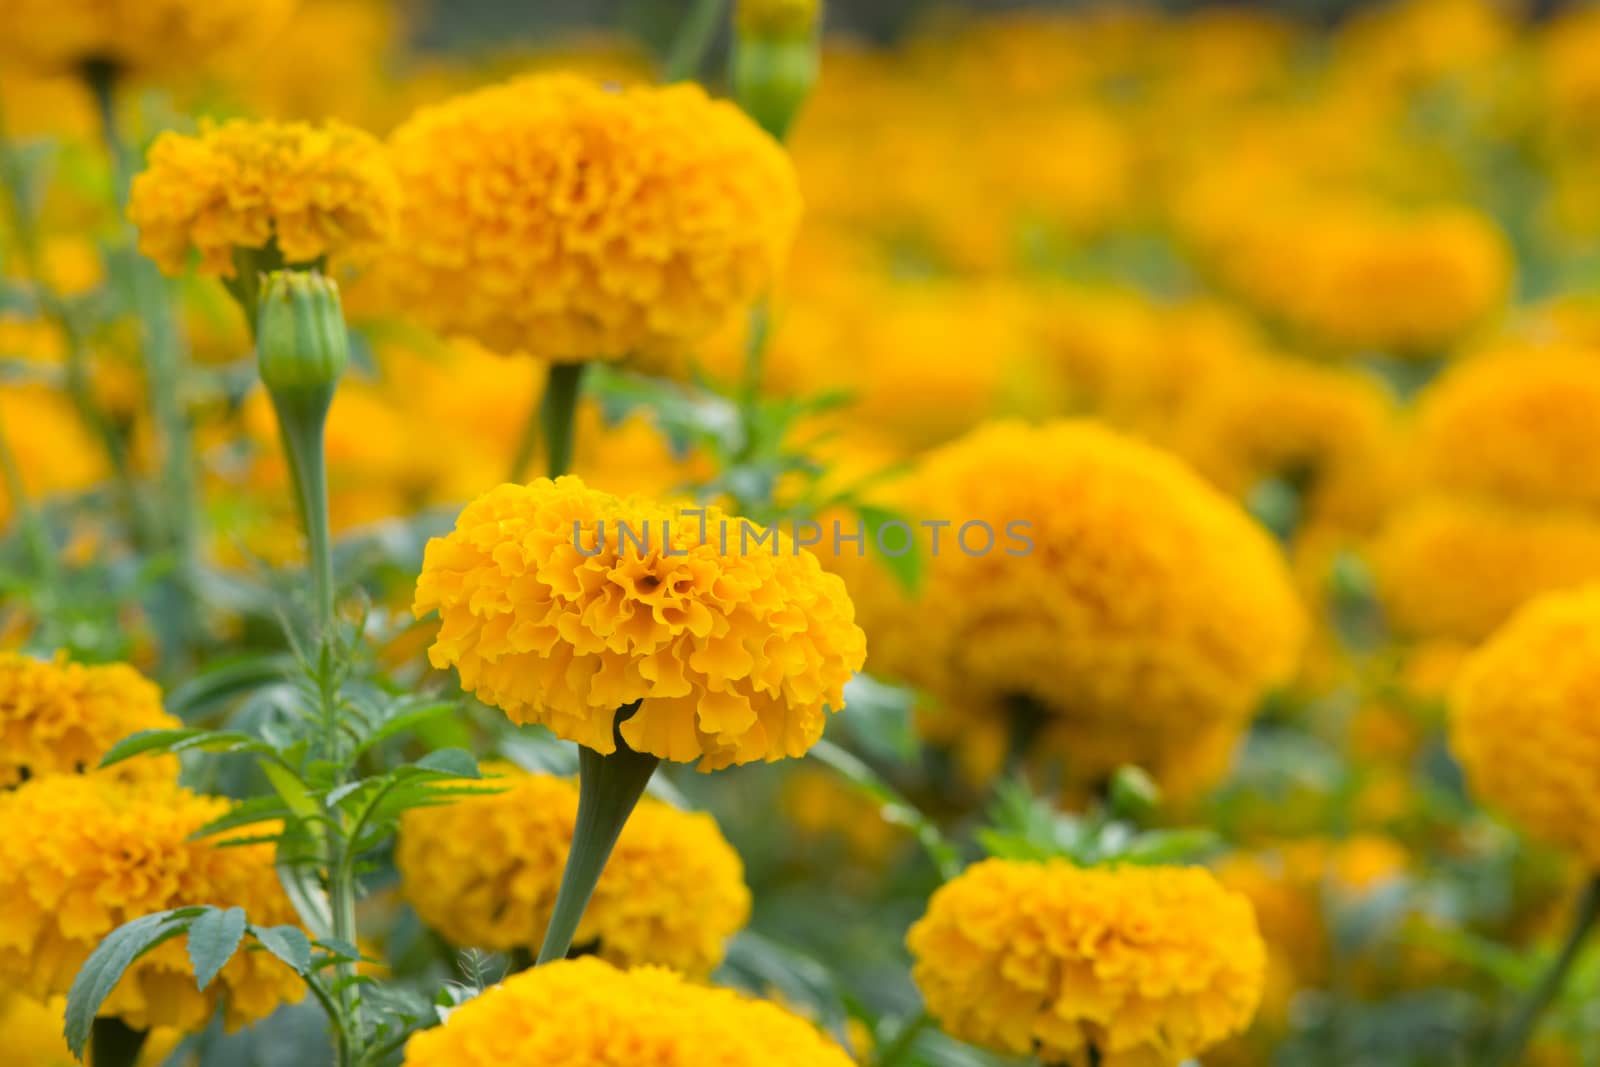 Orange Marigolds flower fields, selective focus